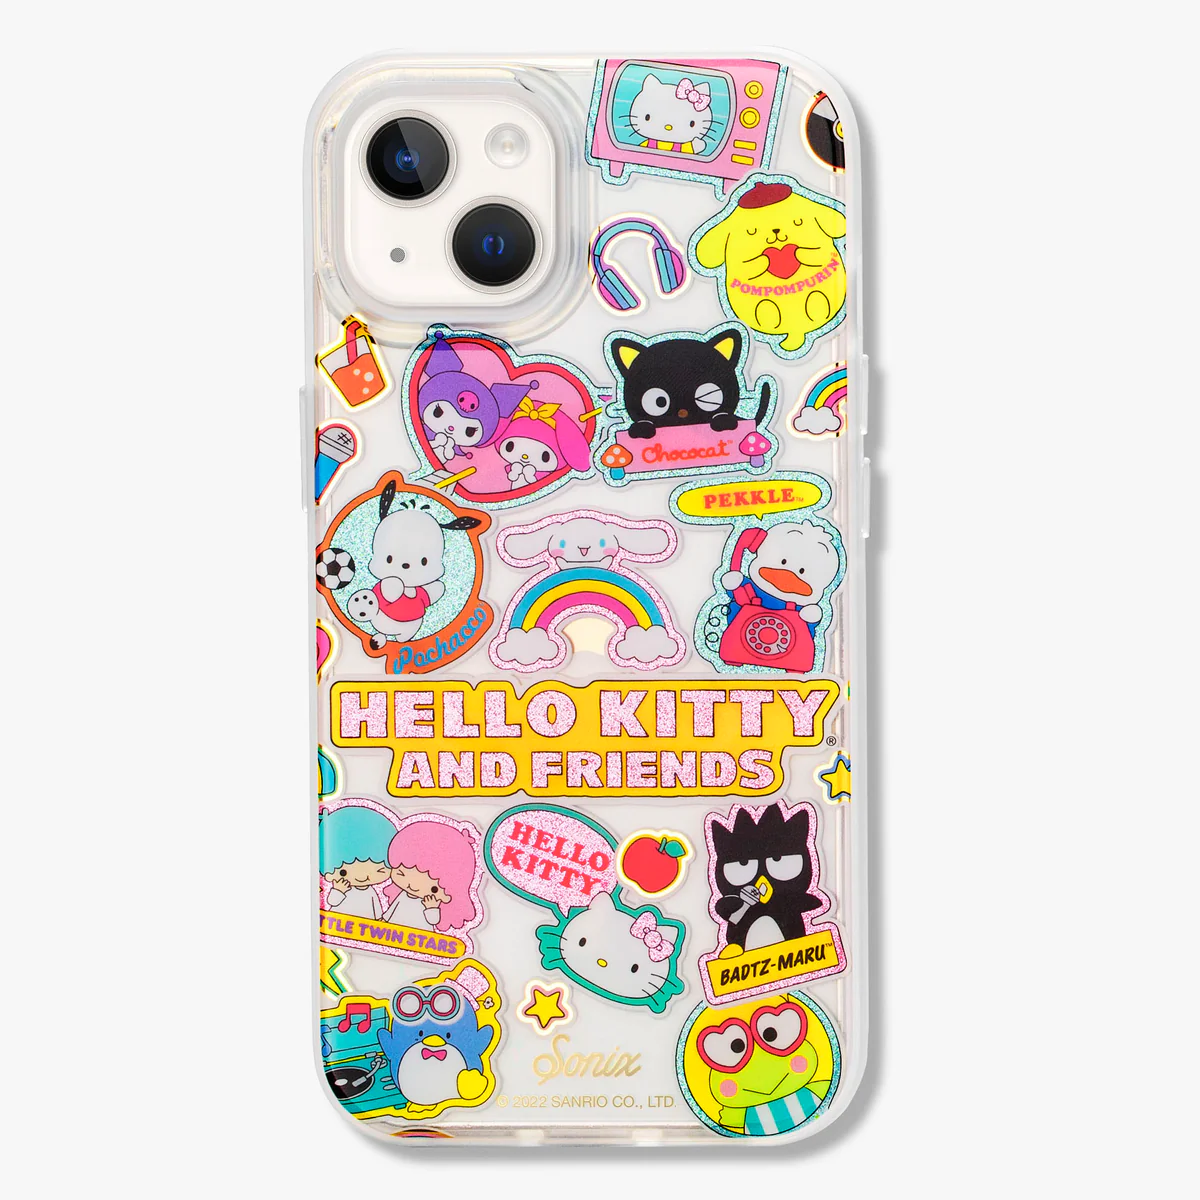 heelo kitty sonix phone case